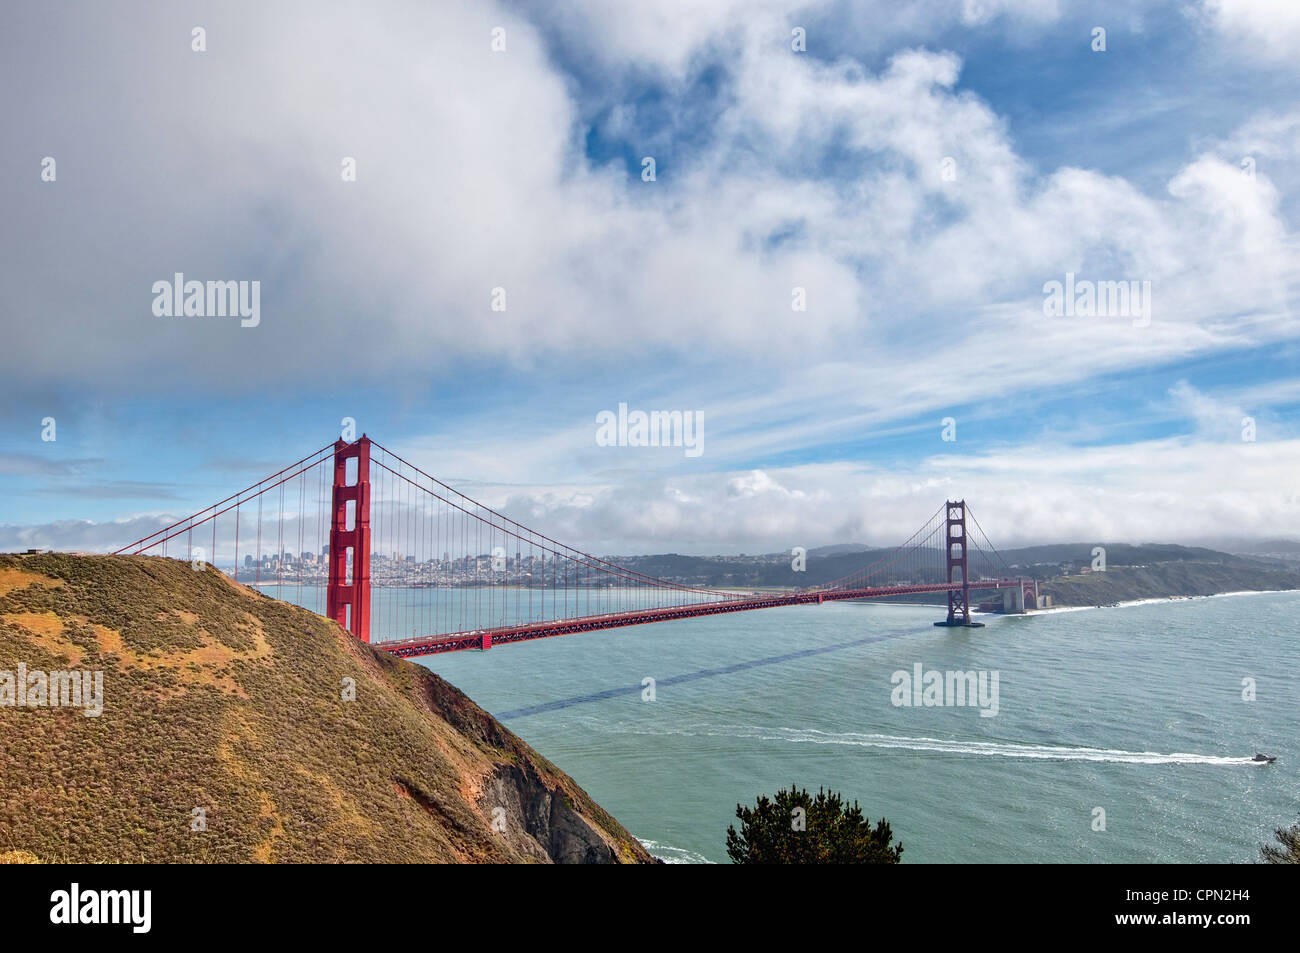 El famoso puente Golden Gate en San Francisco, California. Foto de stock